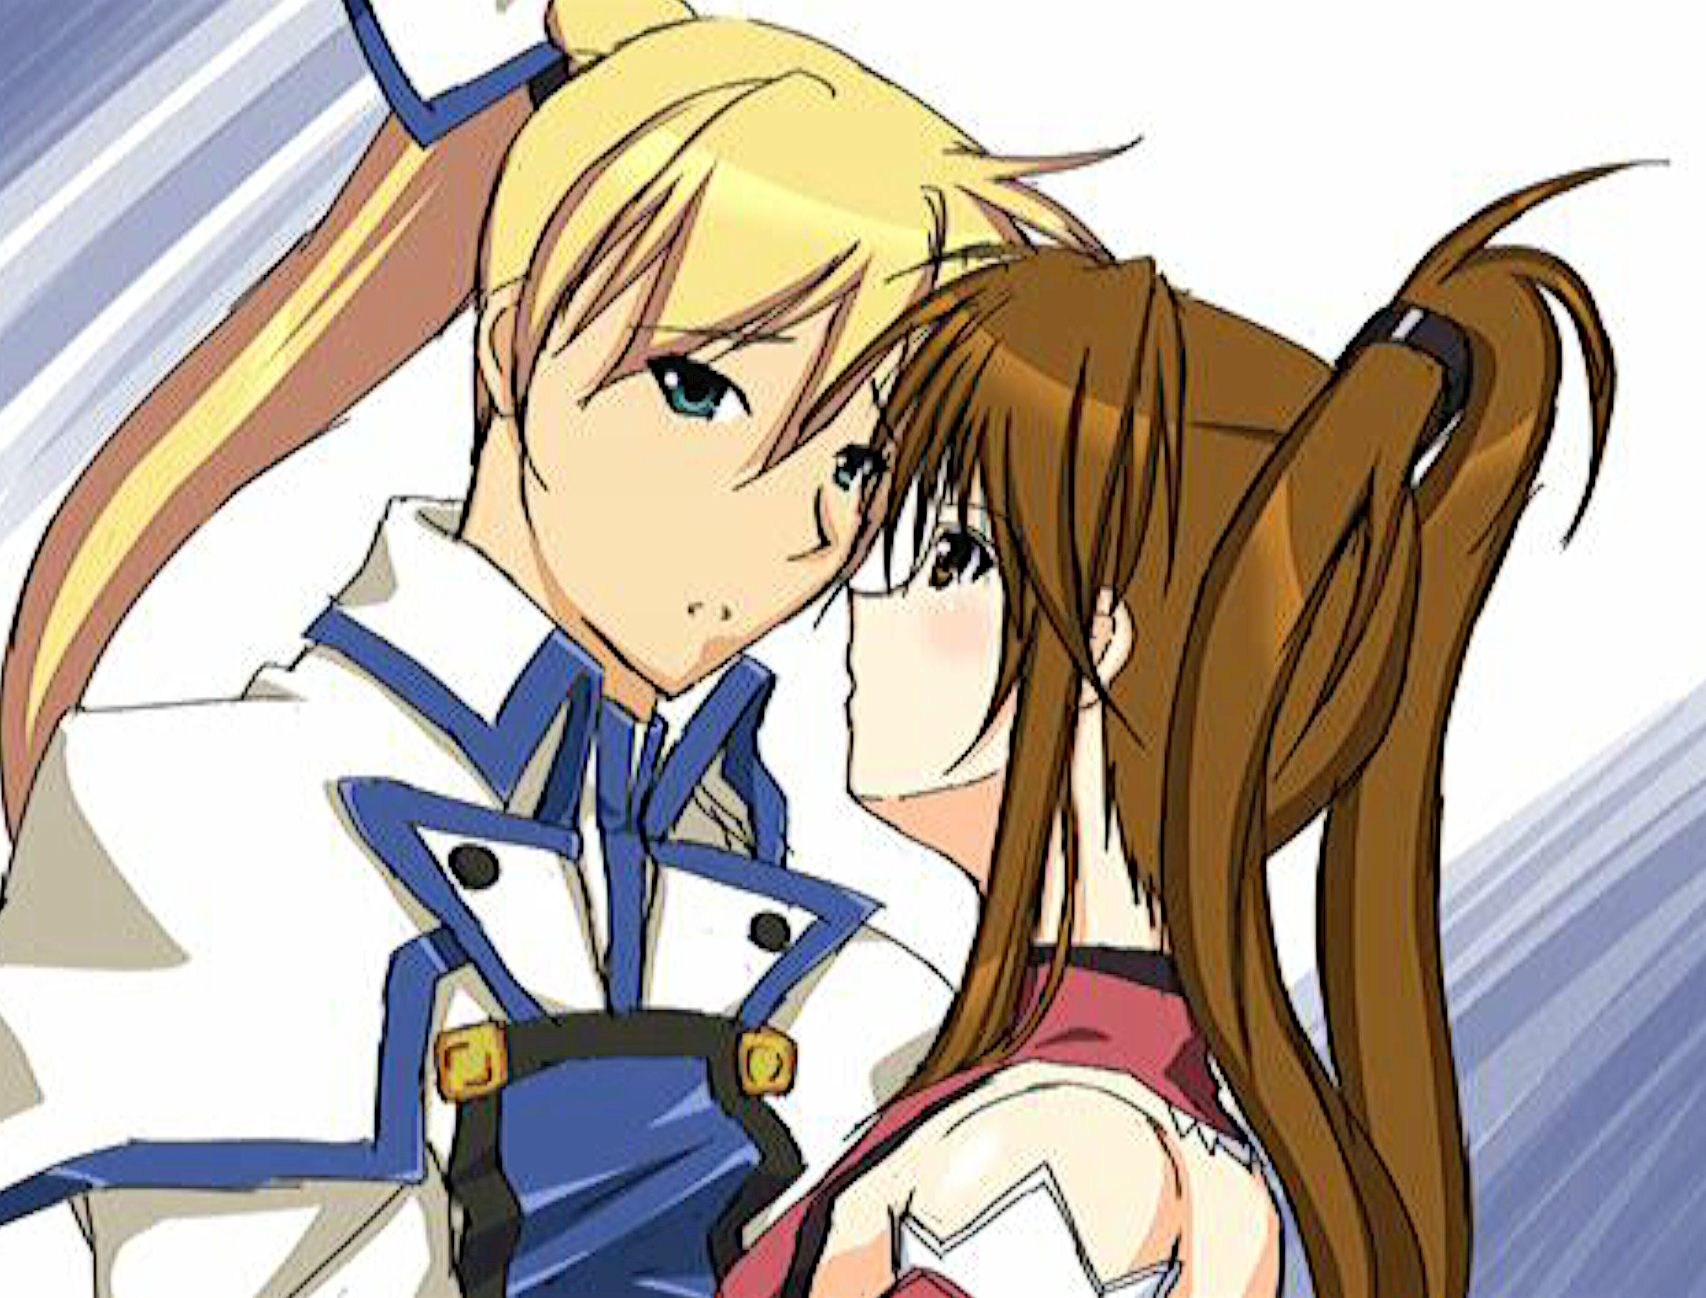 Guilty Gear Guilty Gear Xrd Ky Kiske Kuradoberi Jam Couple Anime Couple Anime Girls Anime Games Figh 1706x1298